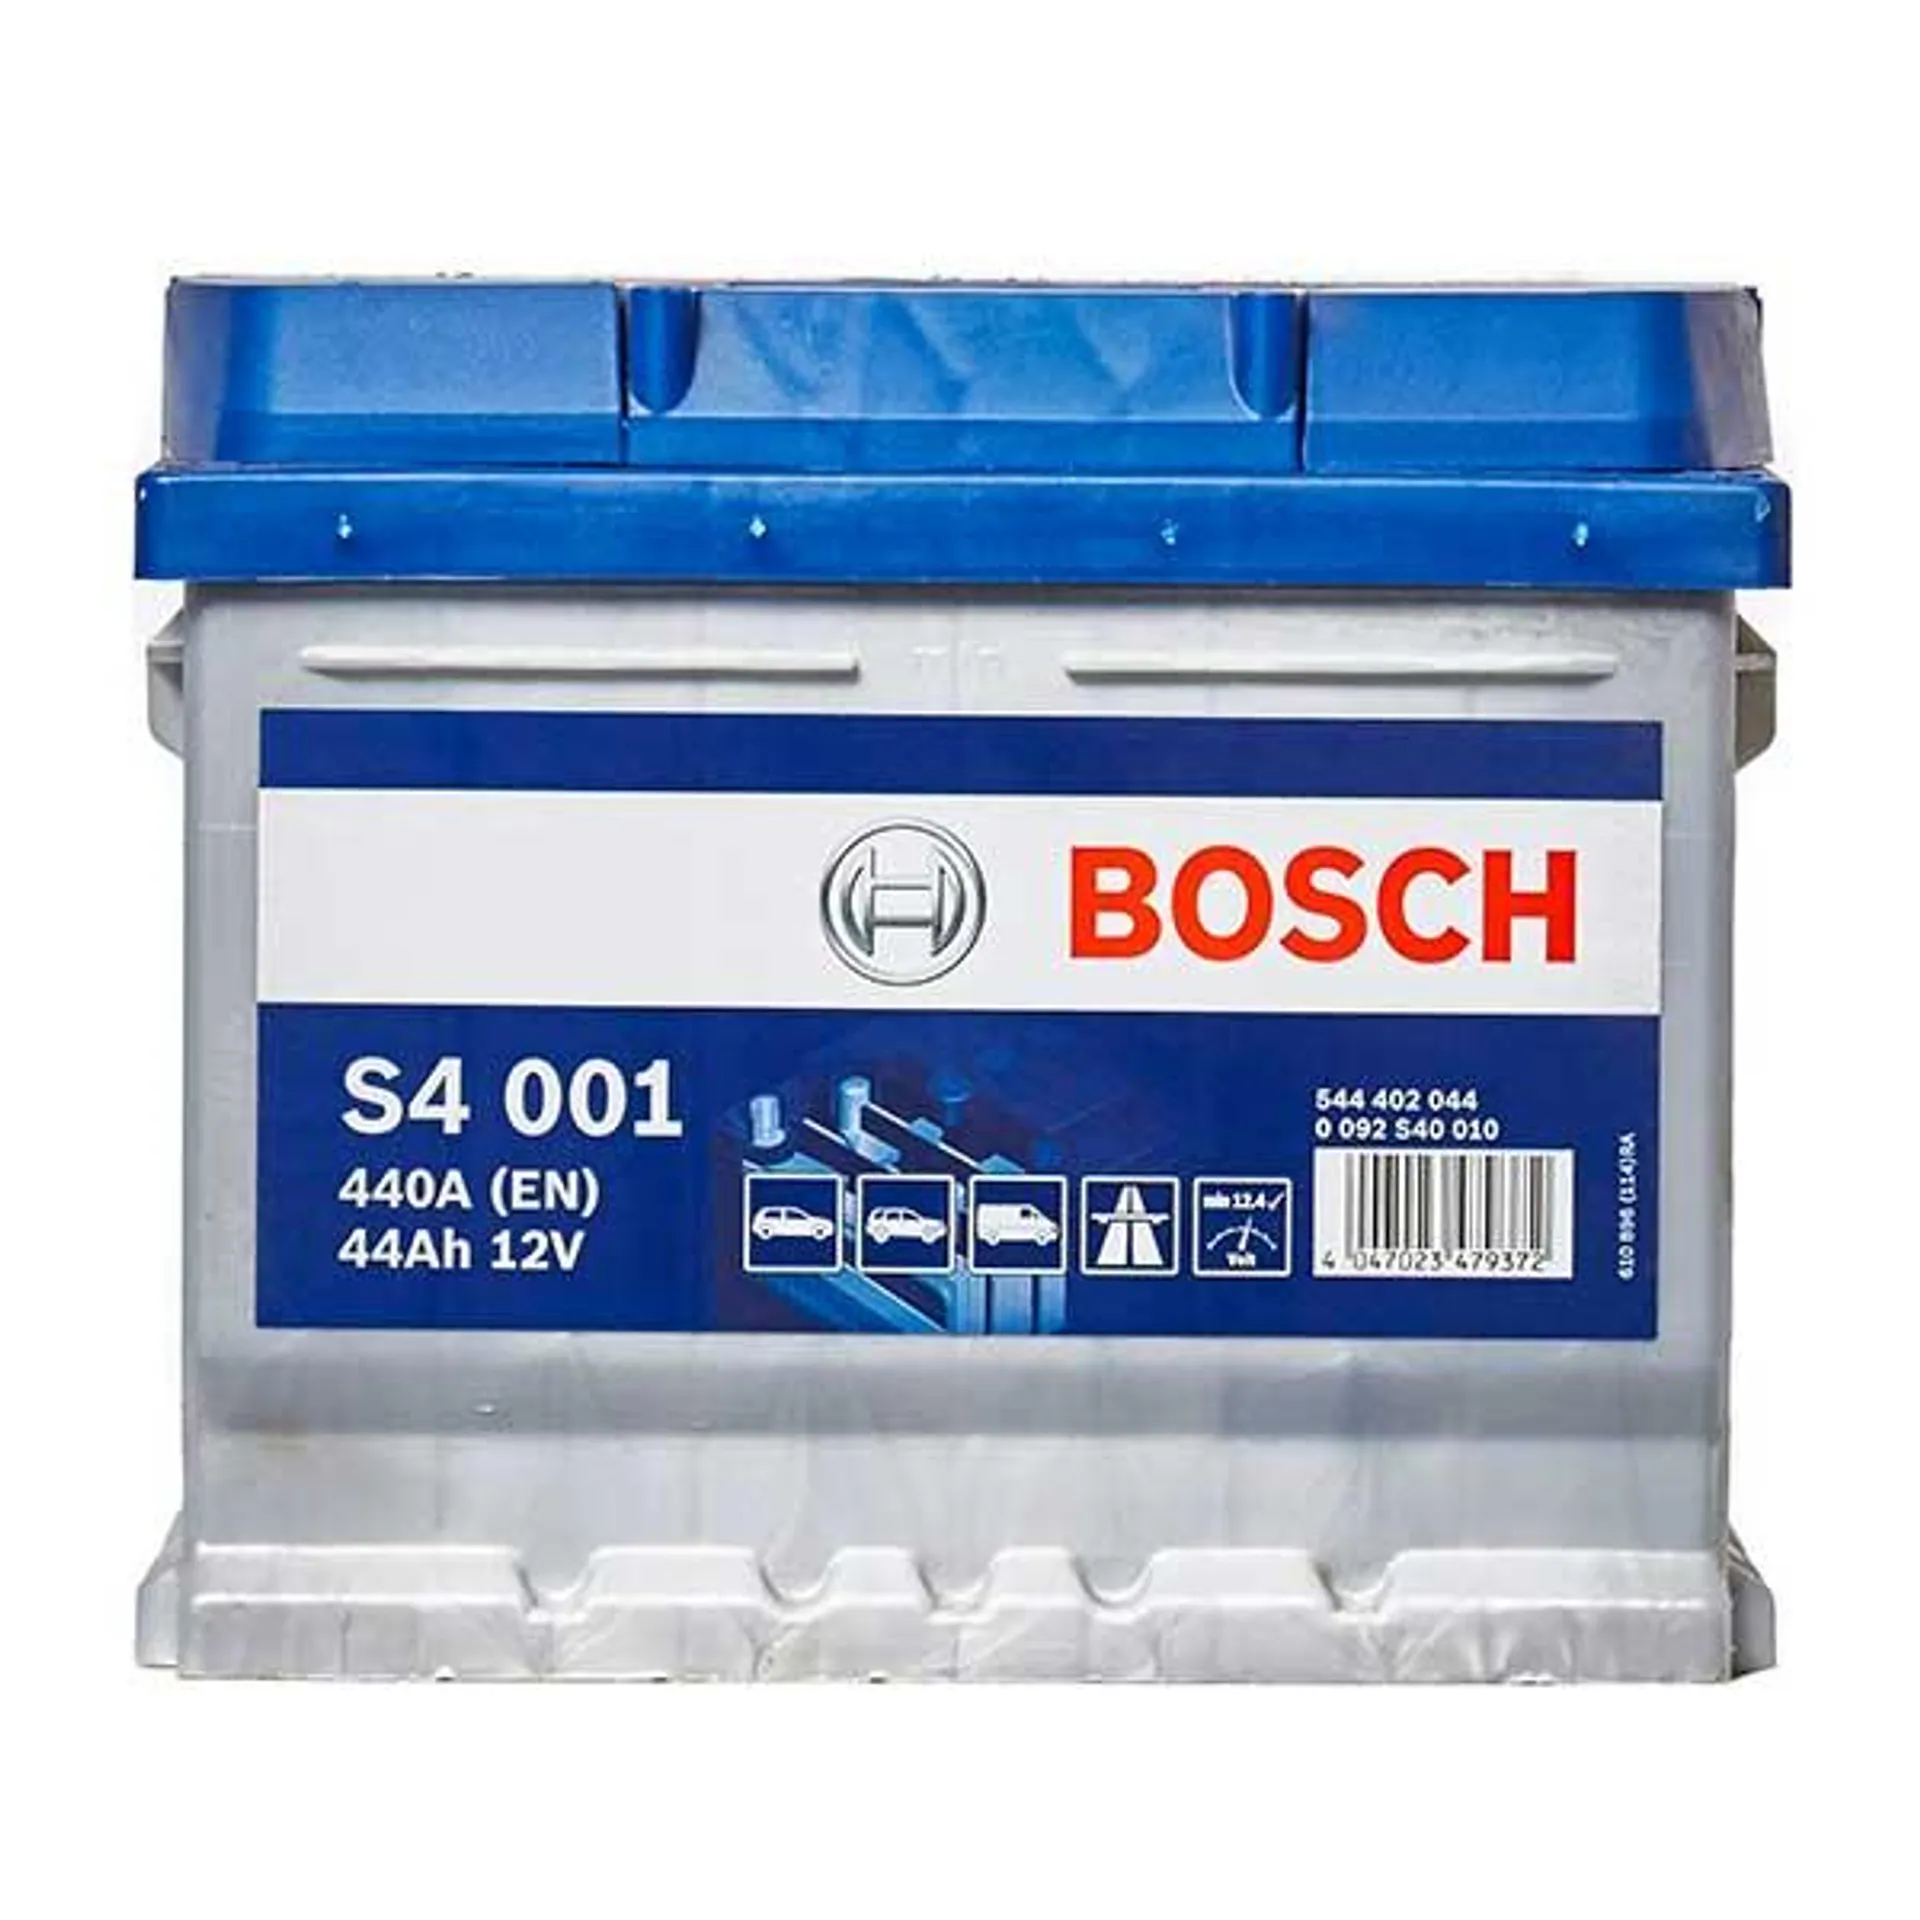 Bosch S4 Car Battery 063 4 Year Guarantee